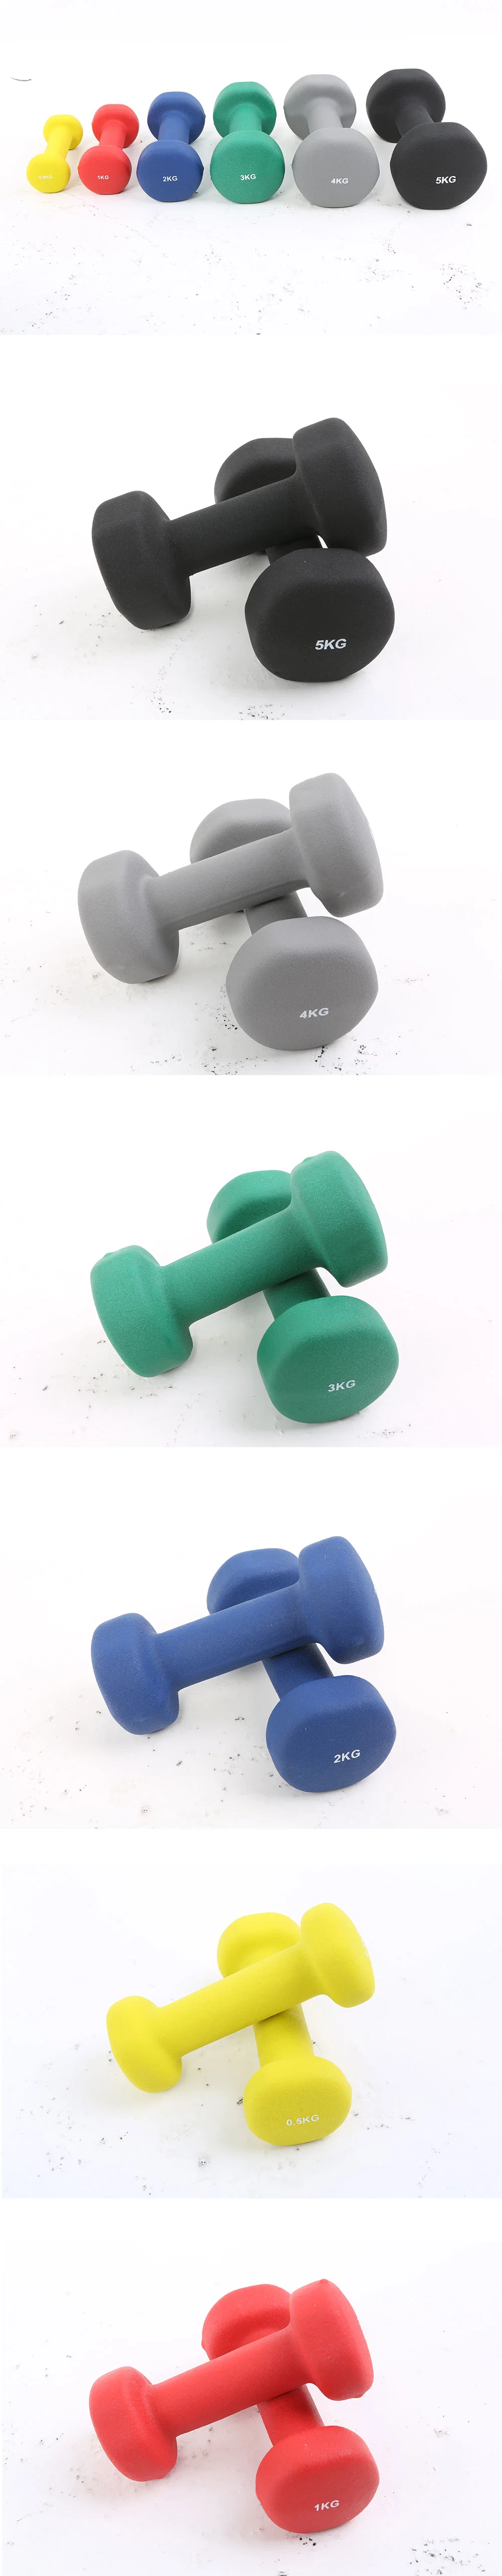 Neoprene Coated Exercise &amp; Fitness Dumbbell for Home Gym Equipment Workouts